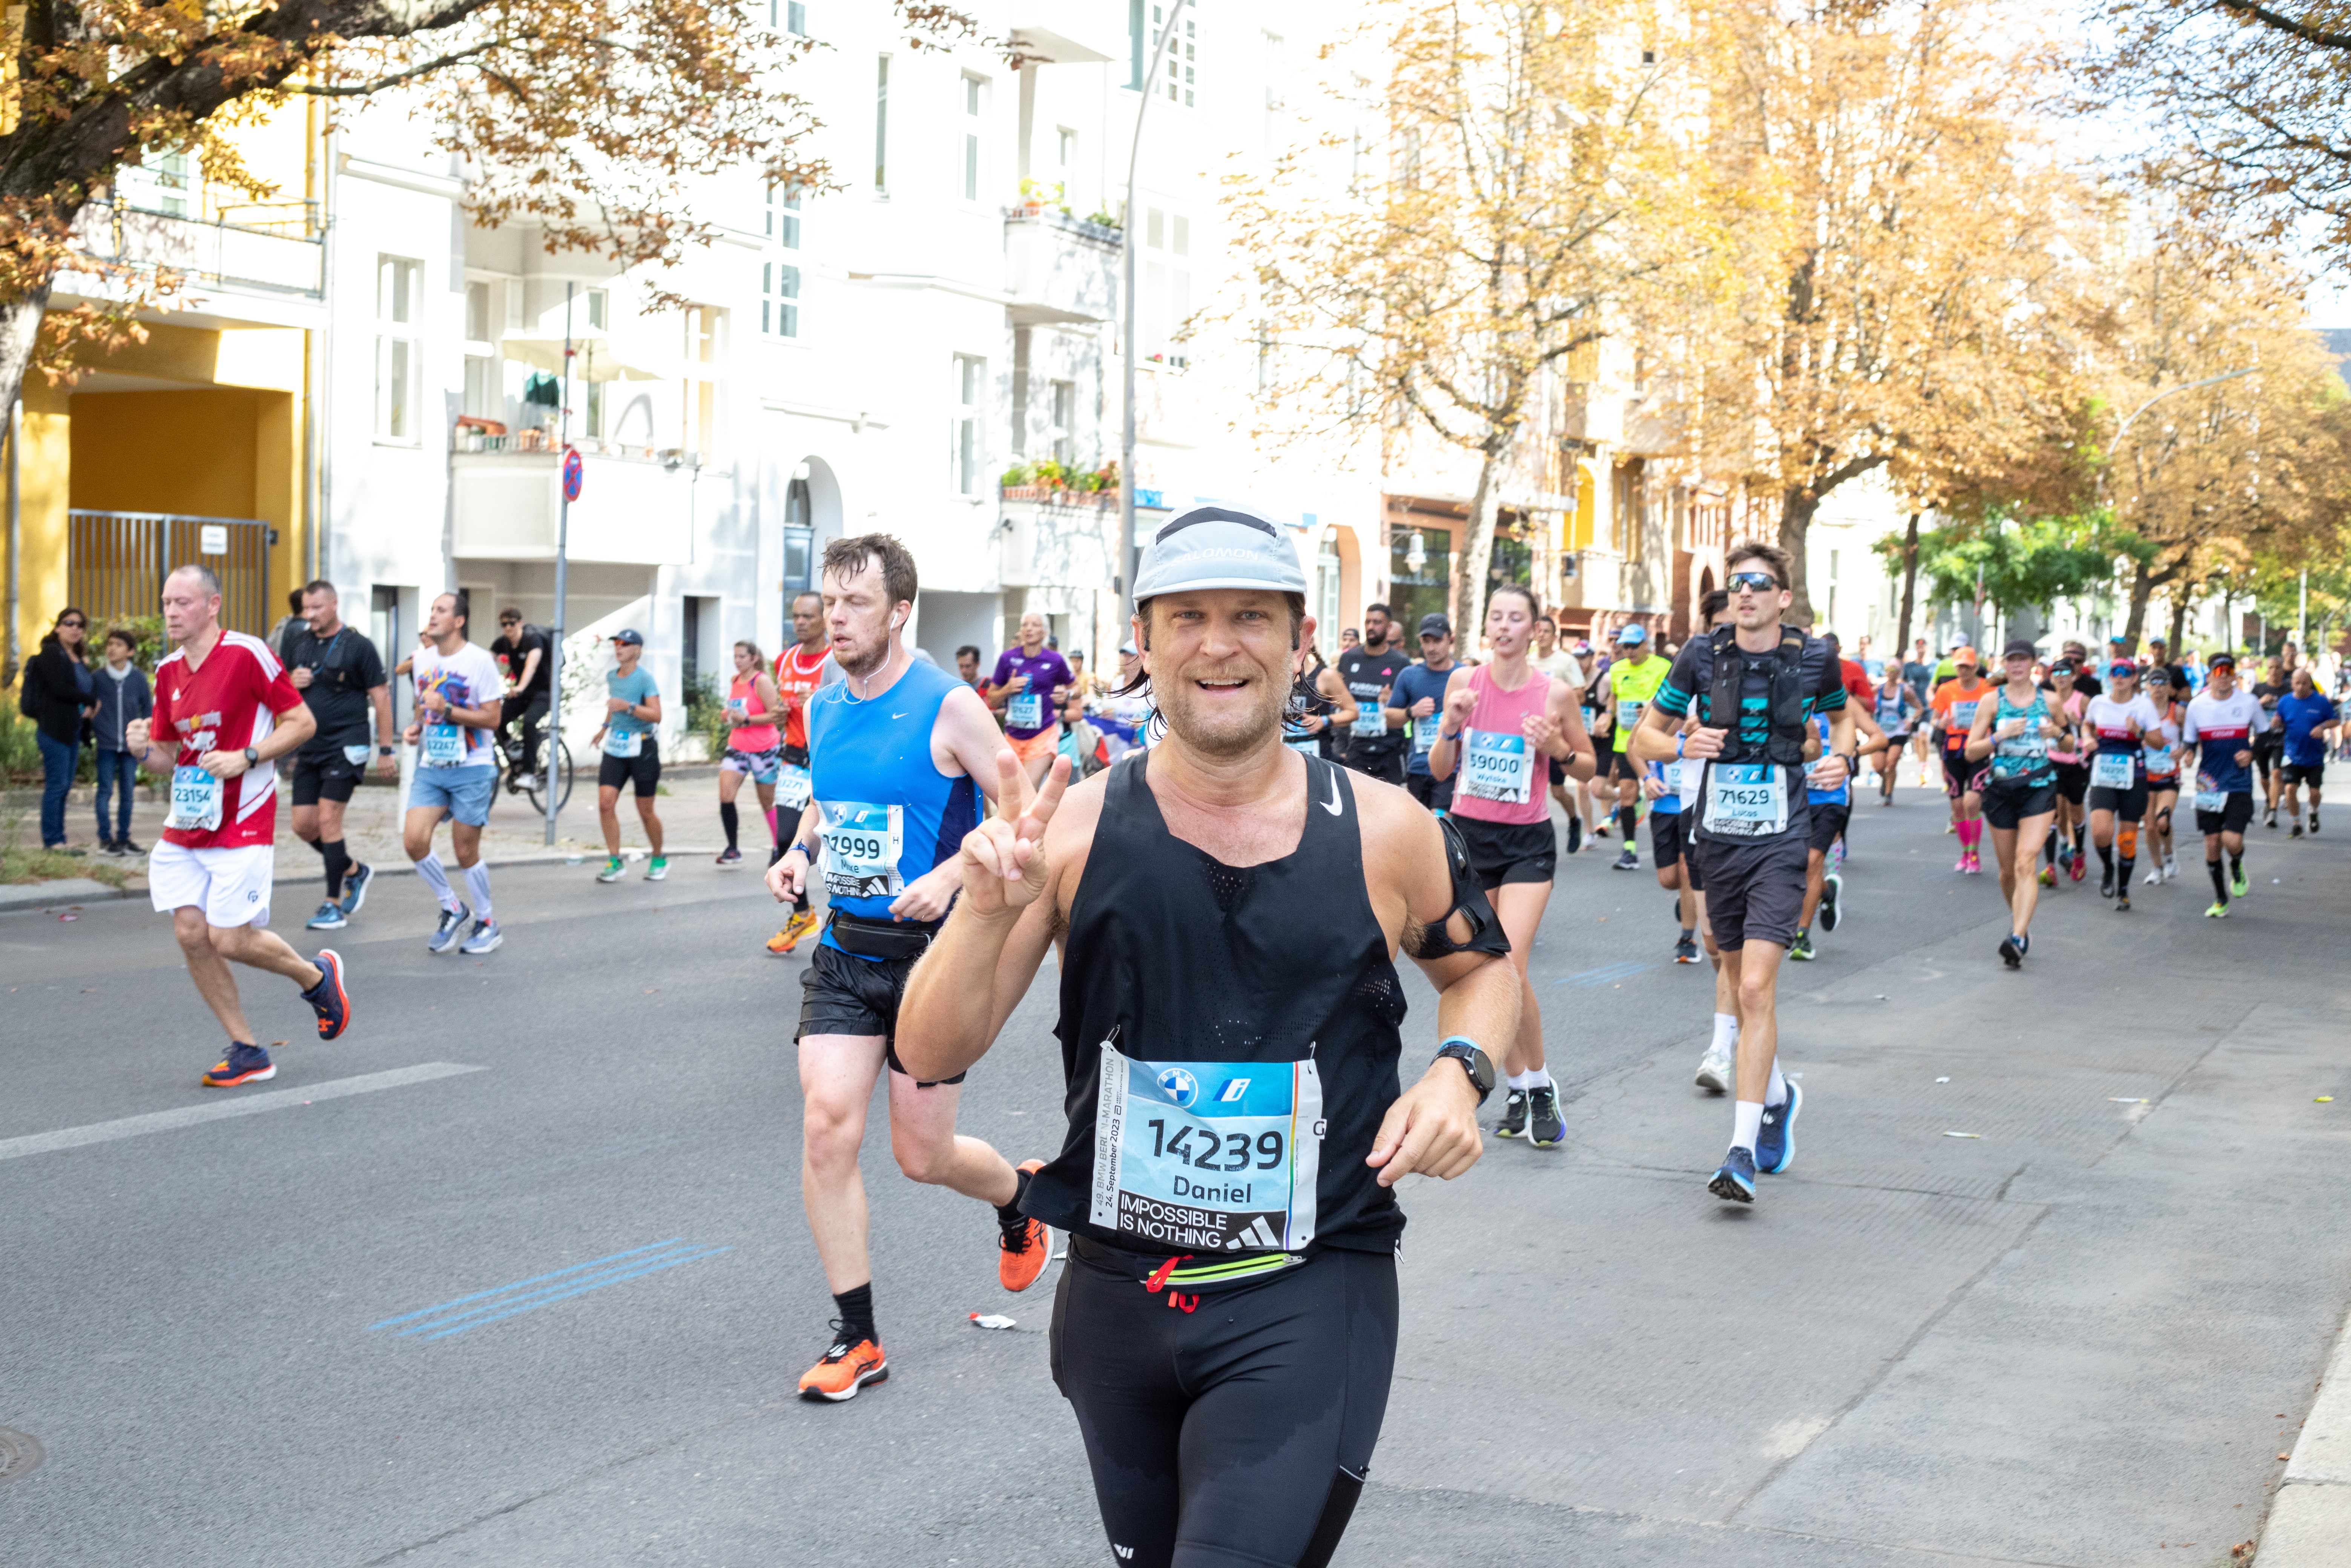 Marathon runner on the streets of Berlin, Germany